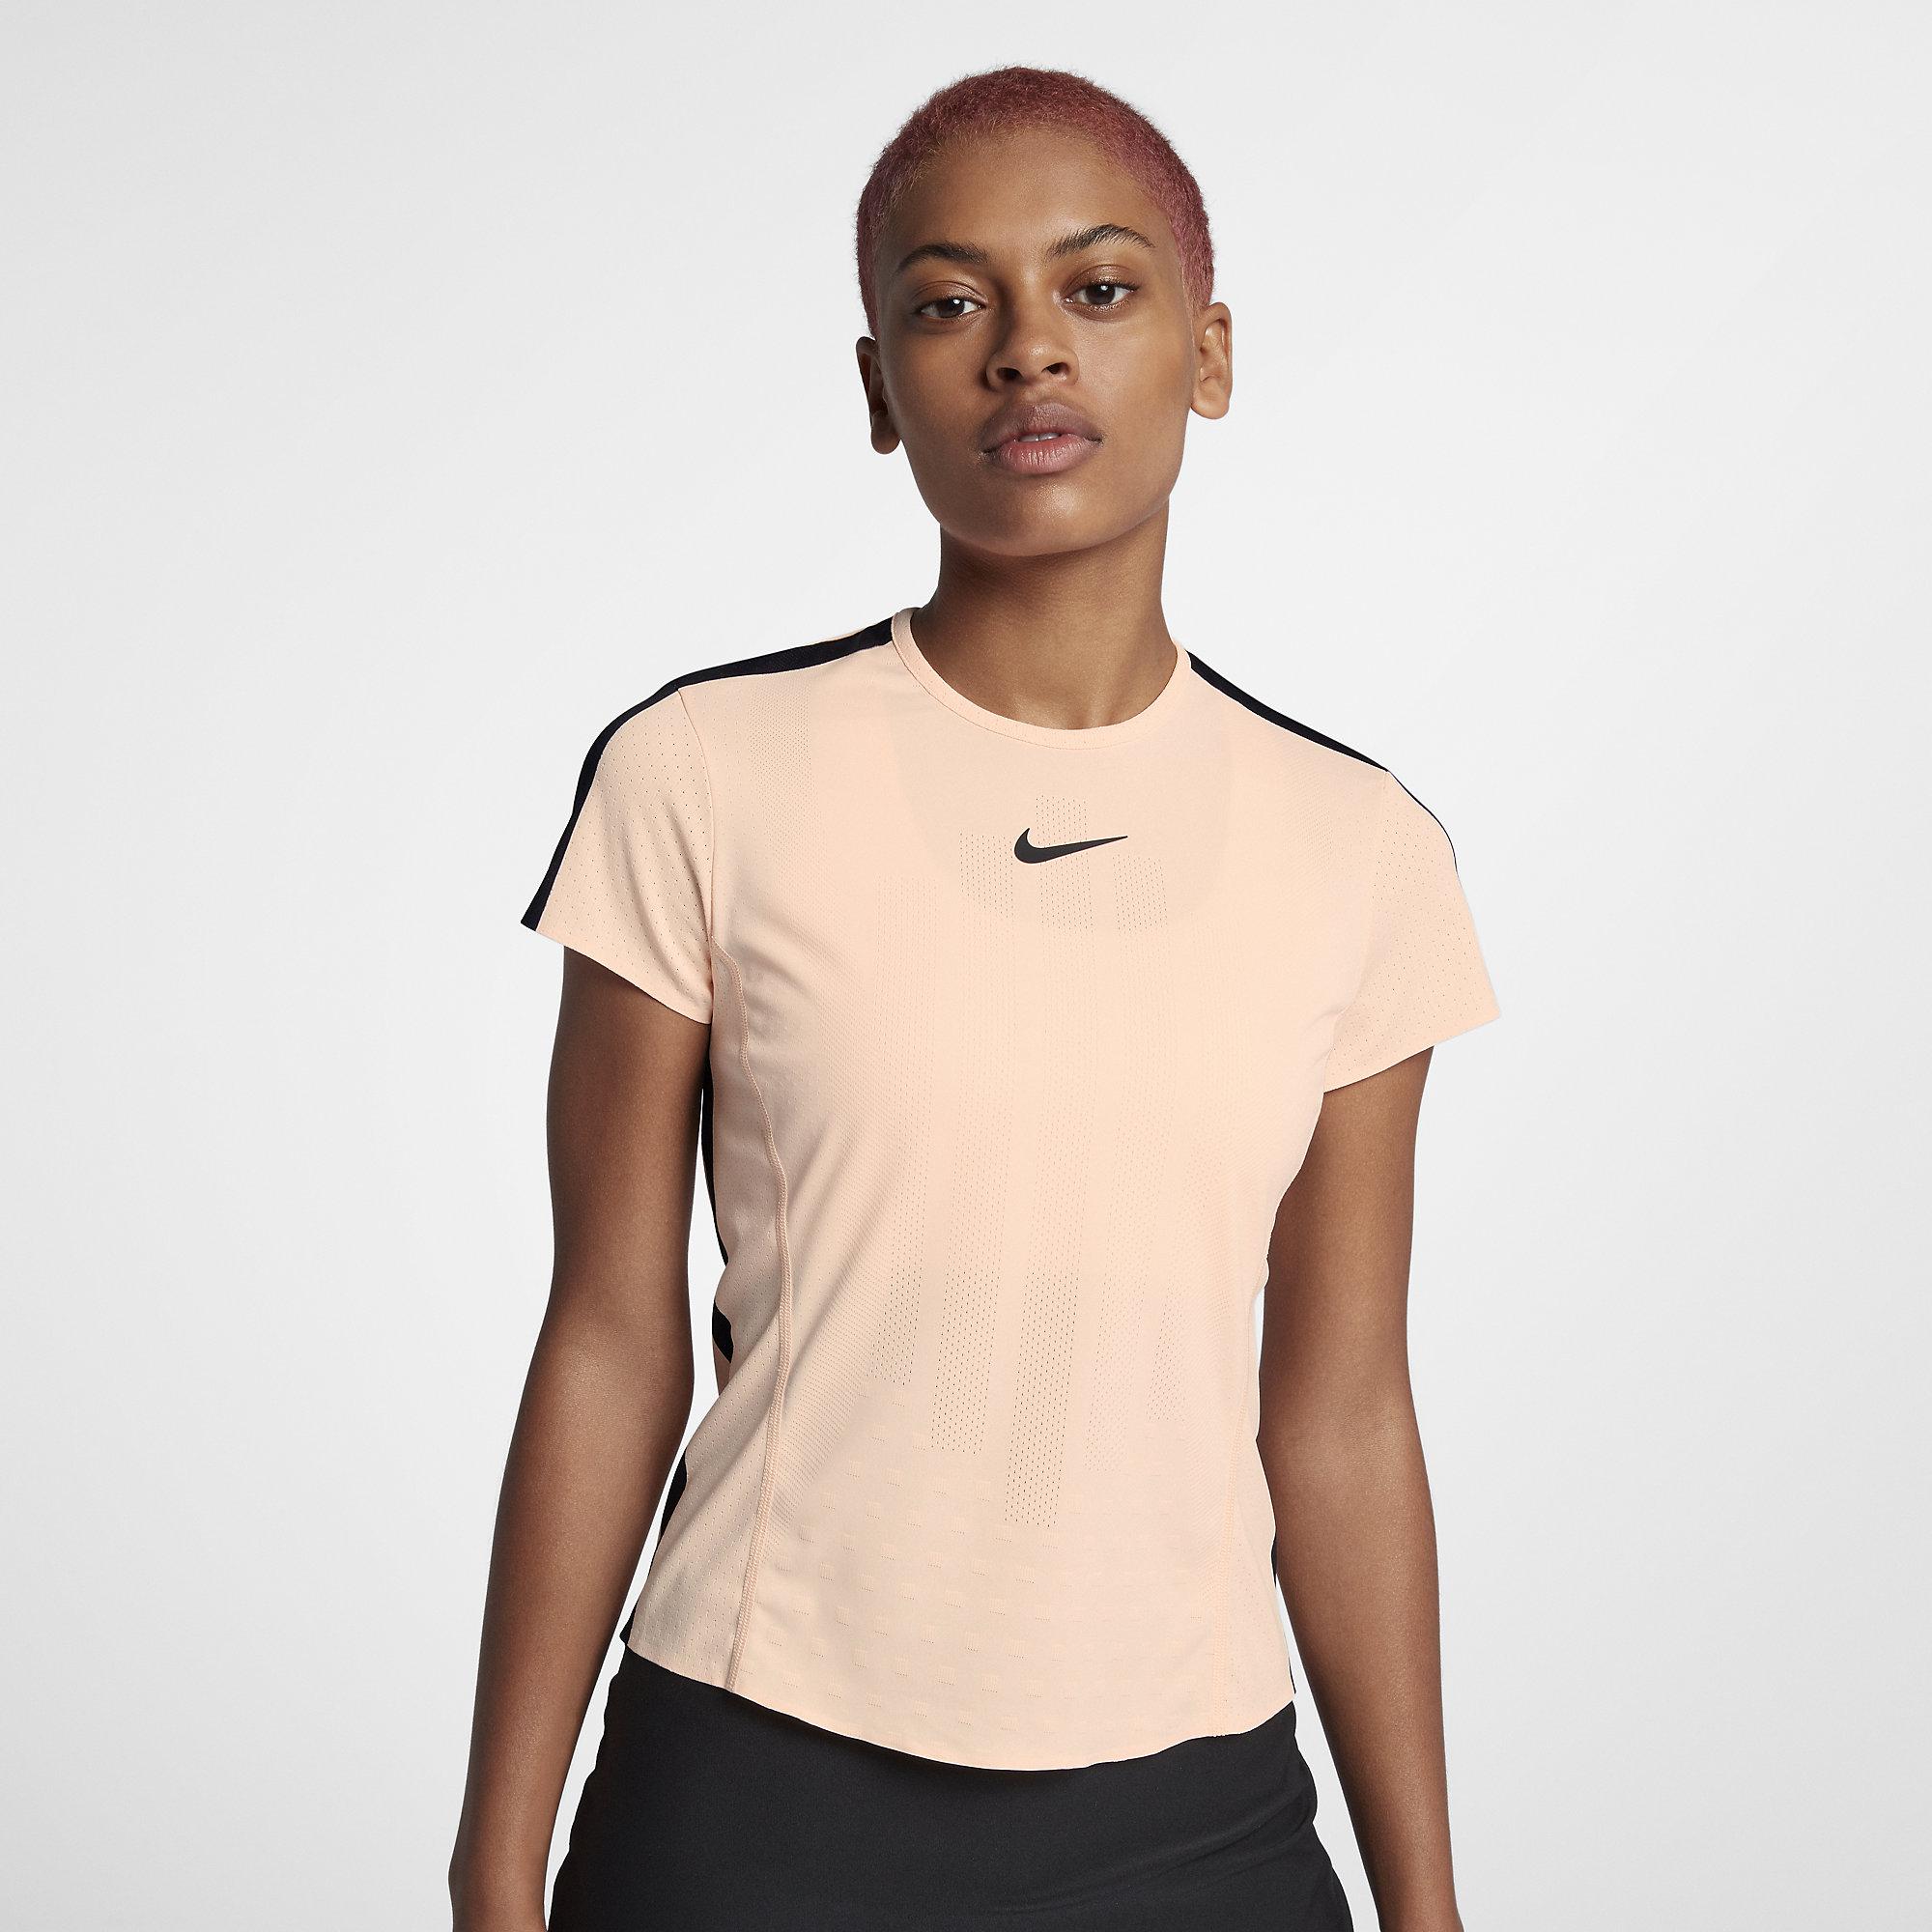 Nike Womens Zonal Cooling Tennis Top - Crimson Tint/Black - Tennisnuts.com